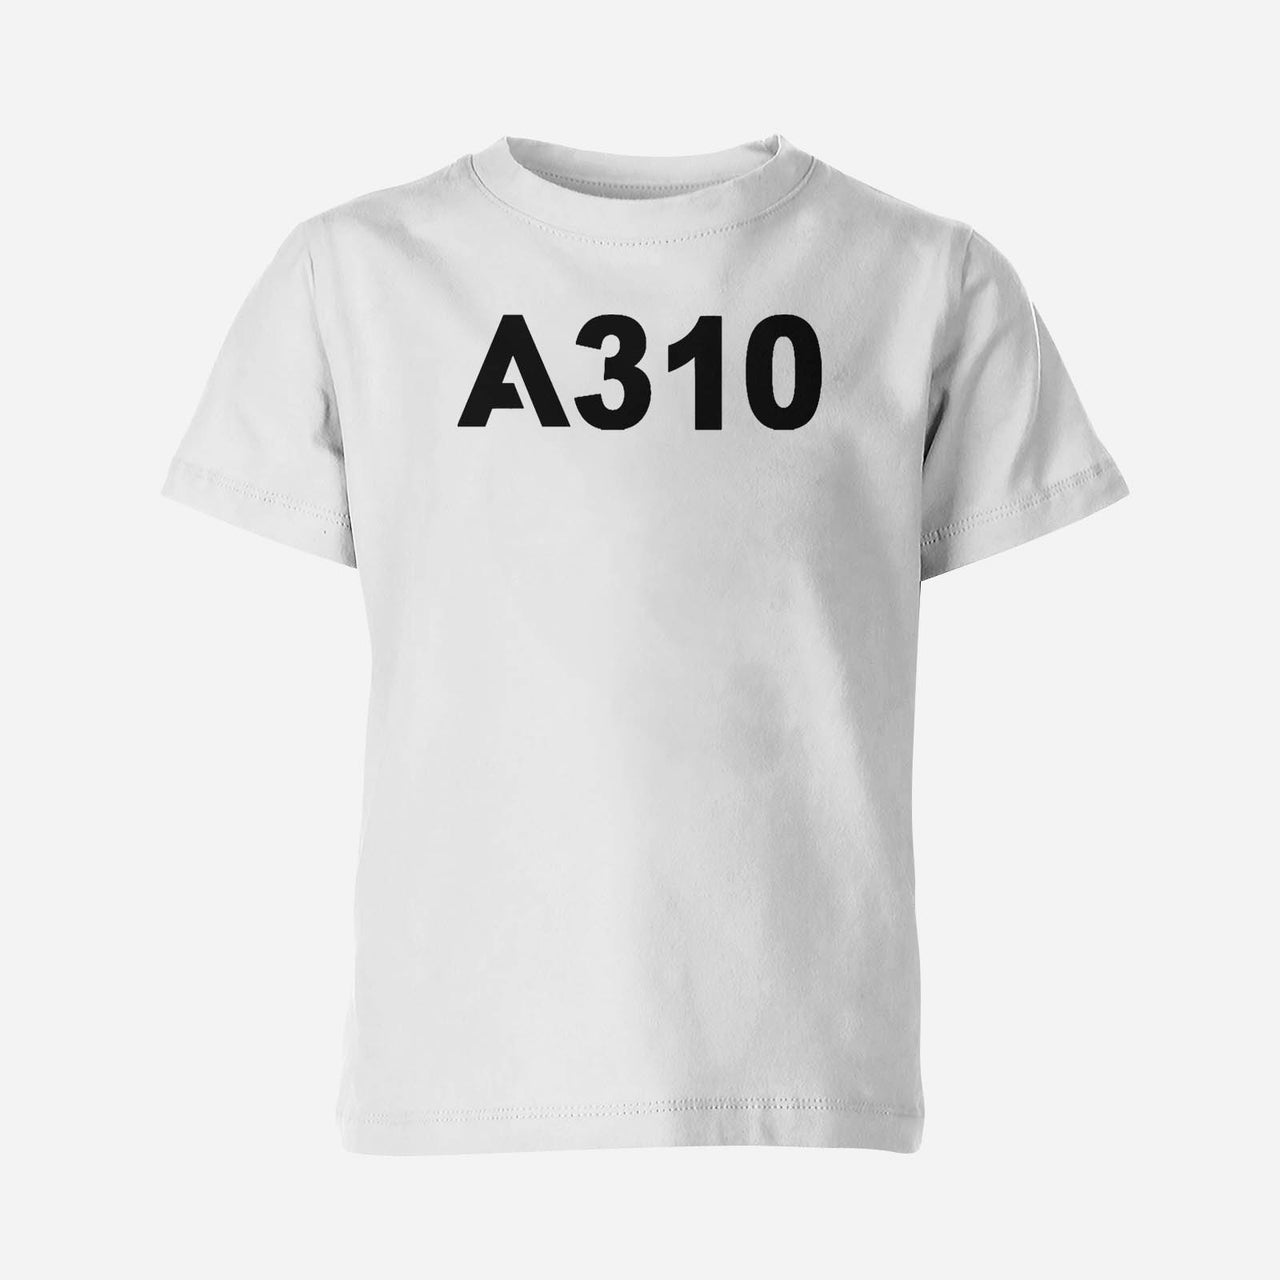 A310 Flat Designed Children T-Shirts